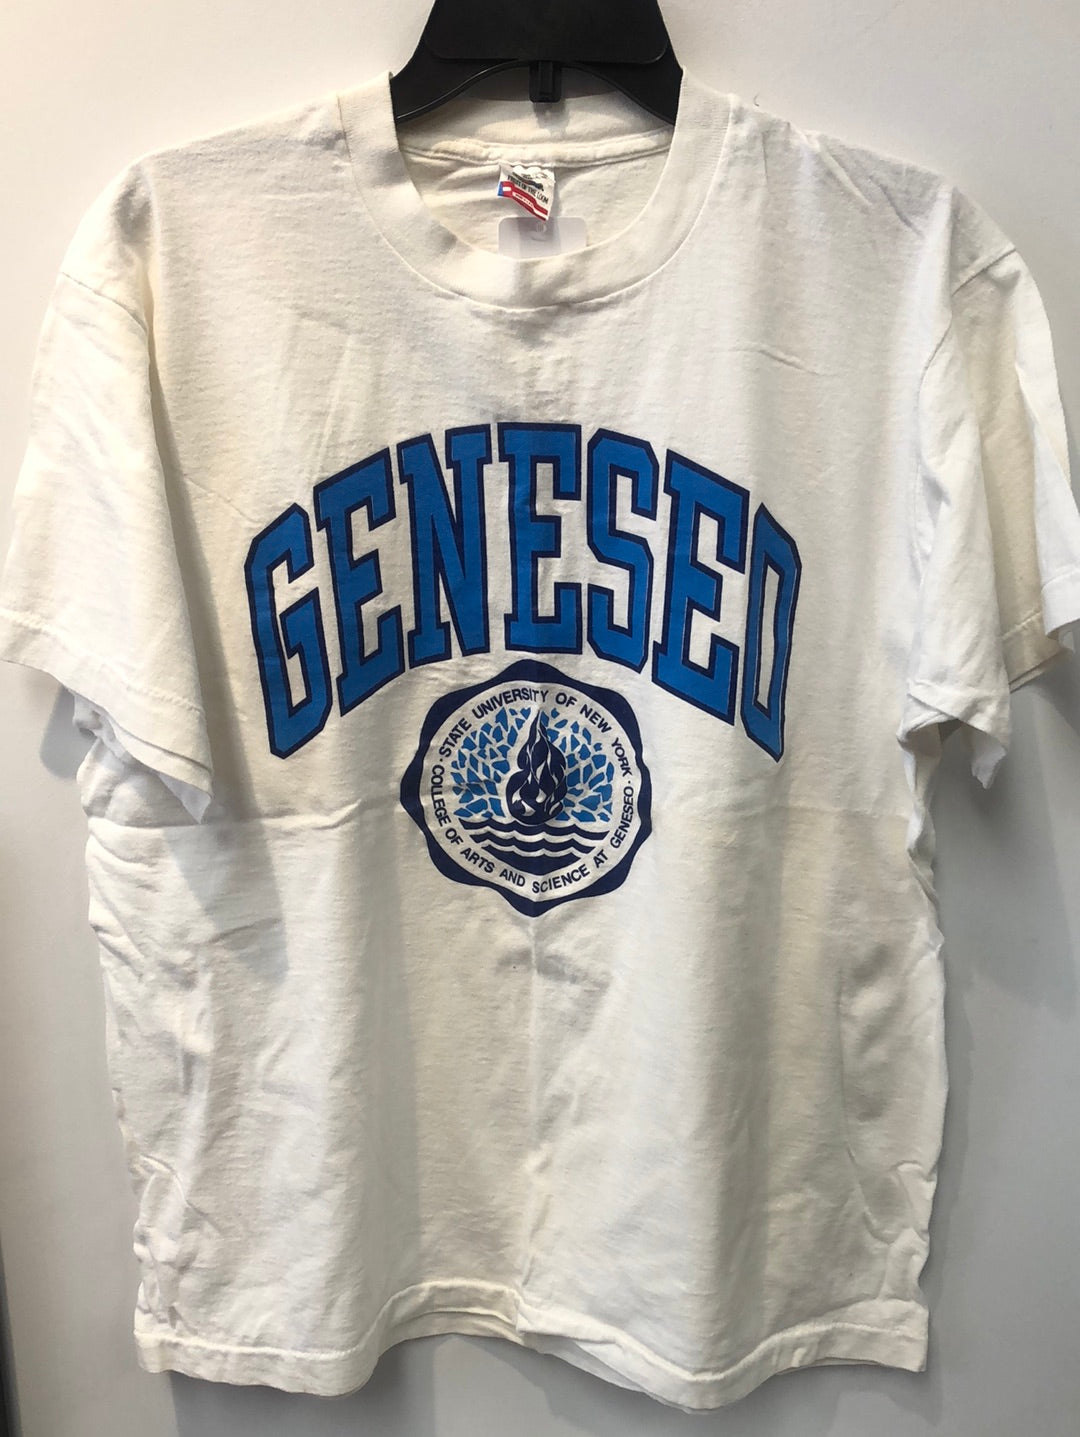 Vintage SUNY Geneseo t-shirt fits L/XL